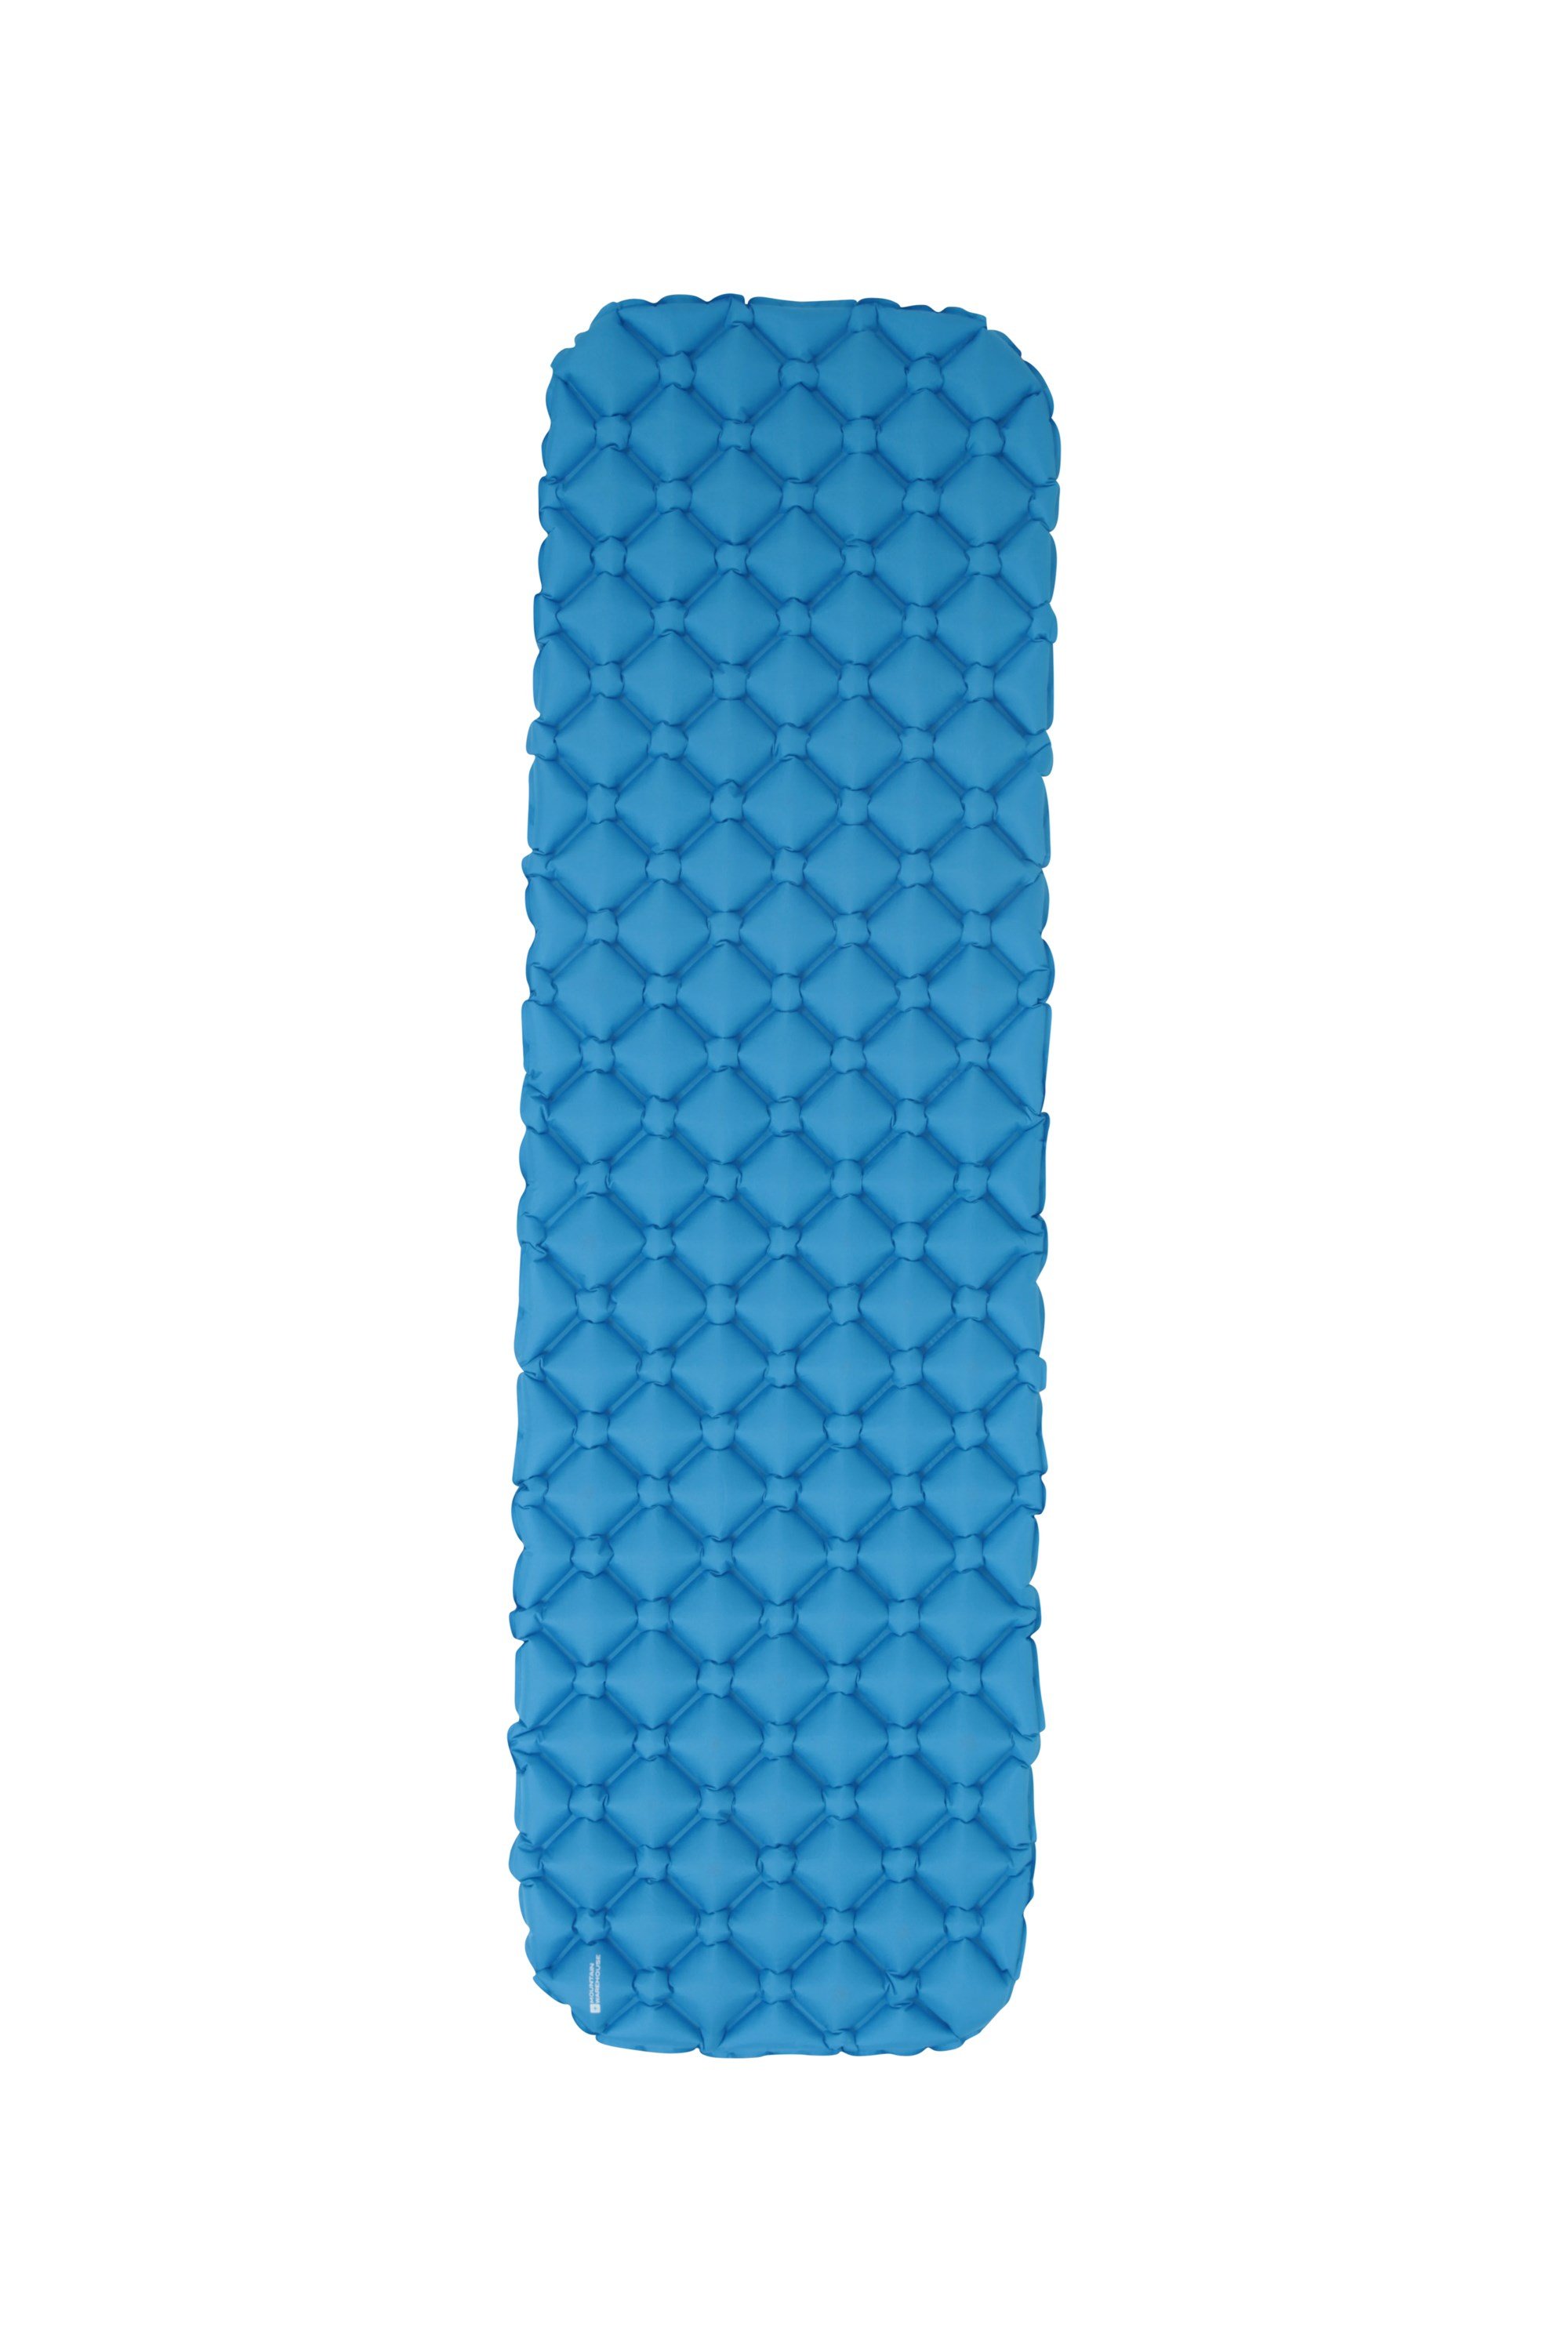 Matelas Gonflable Compact - Bleu